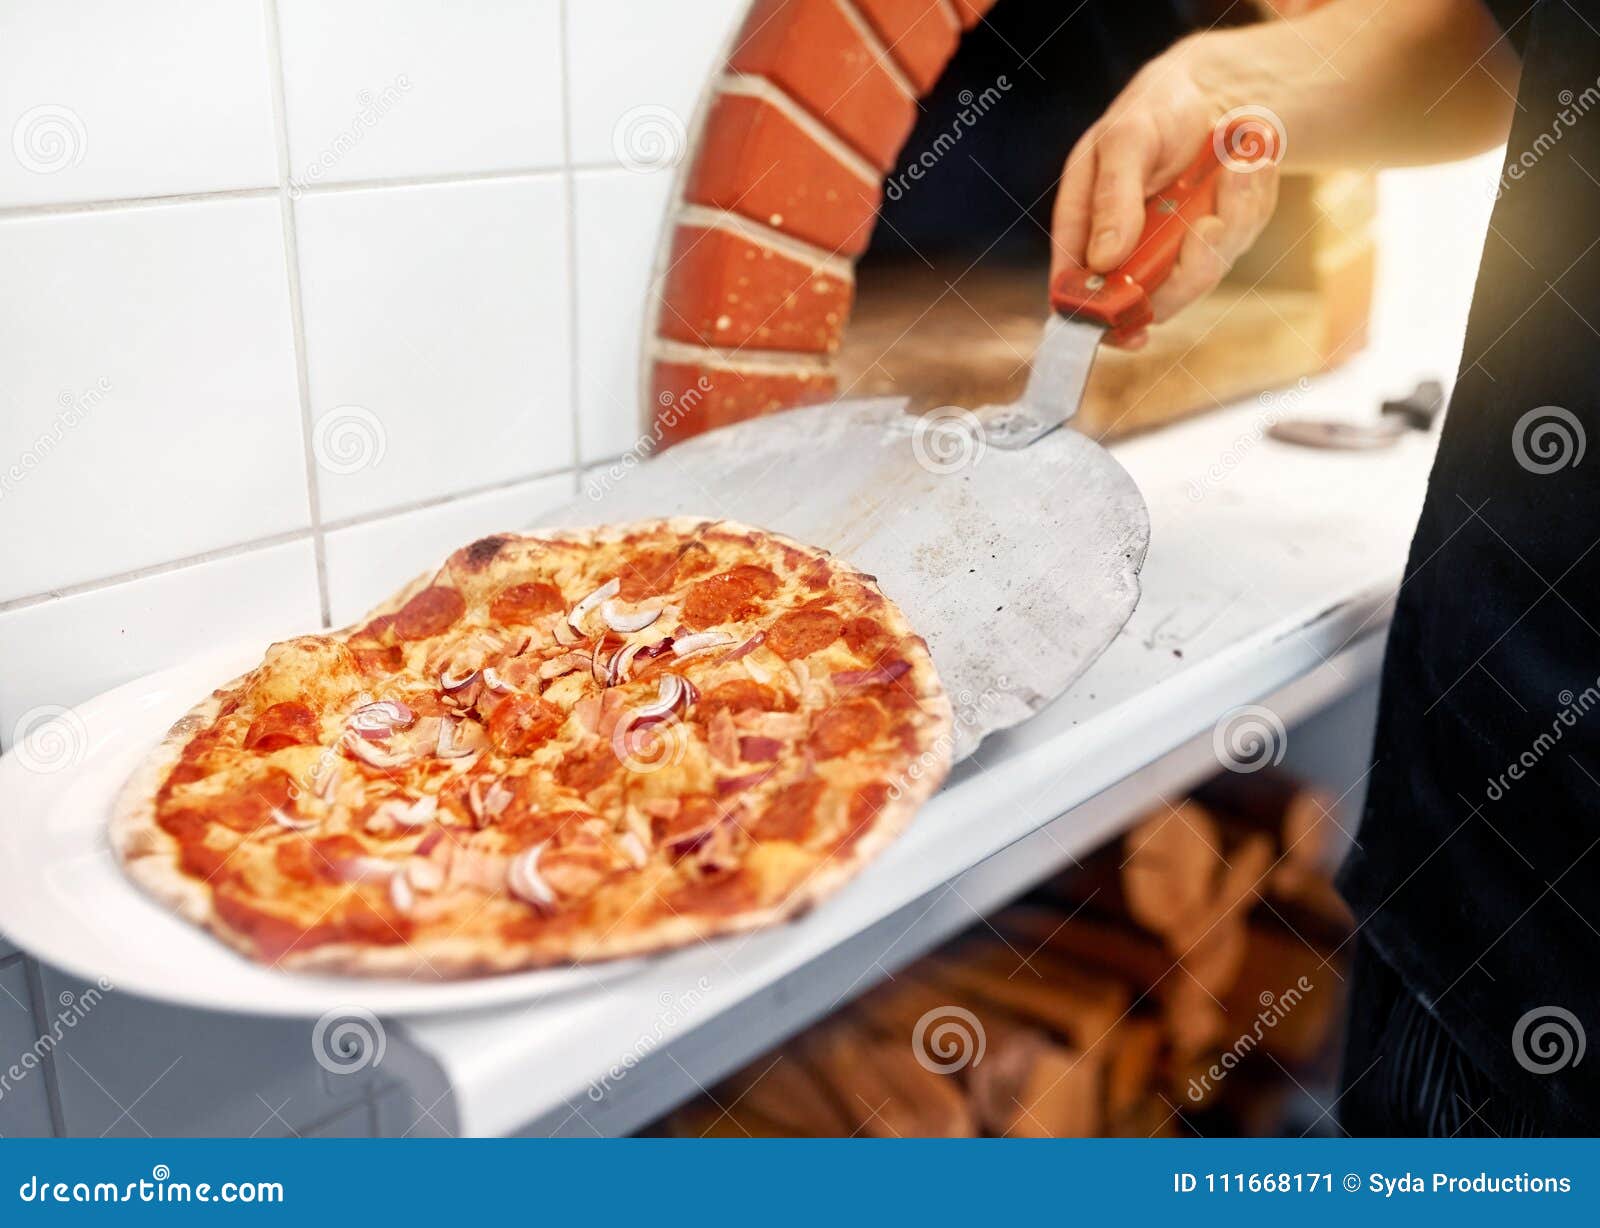 пицца повар ру в духовке фото 93